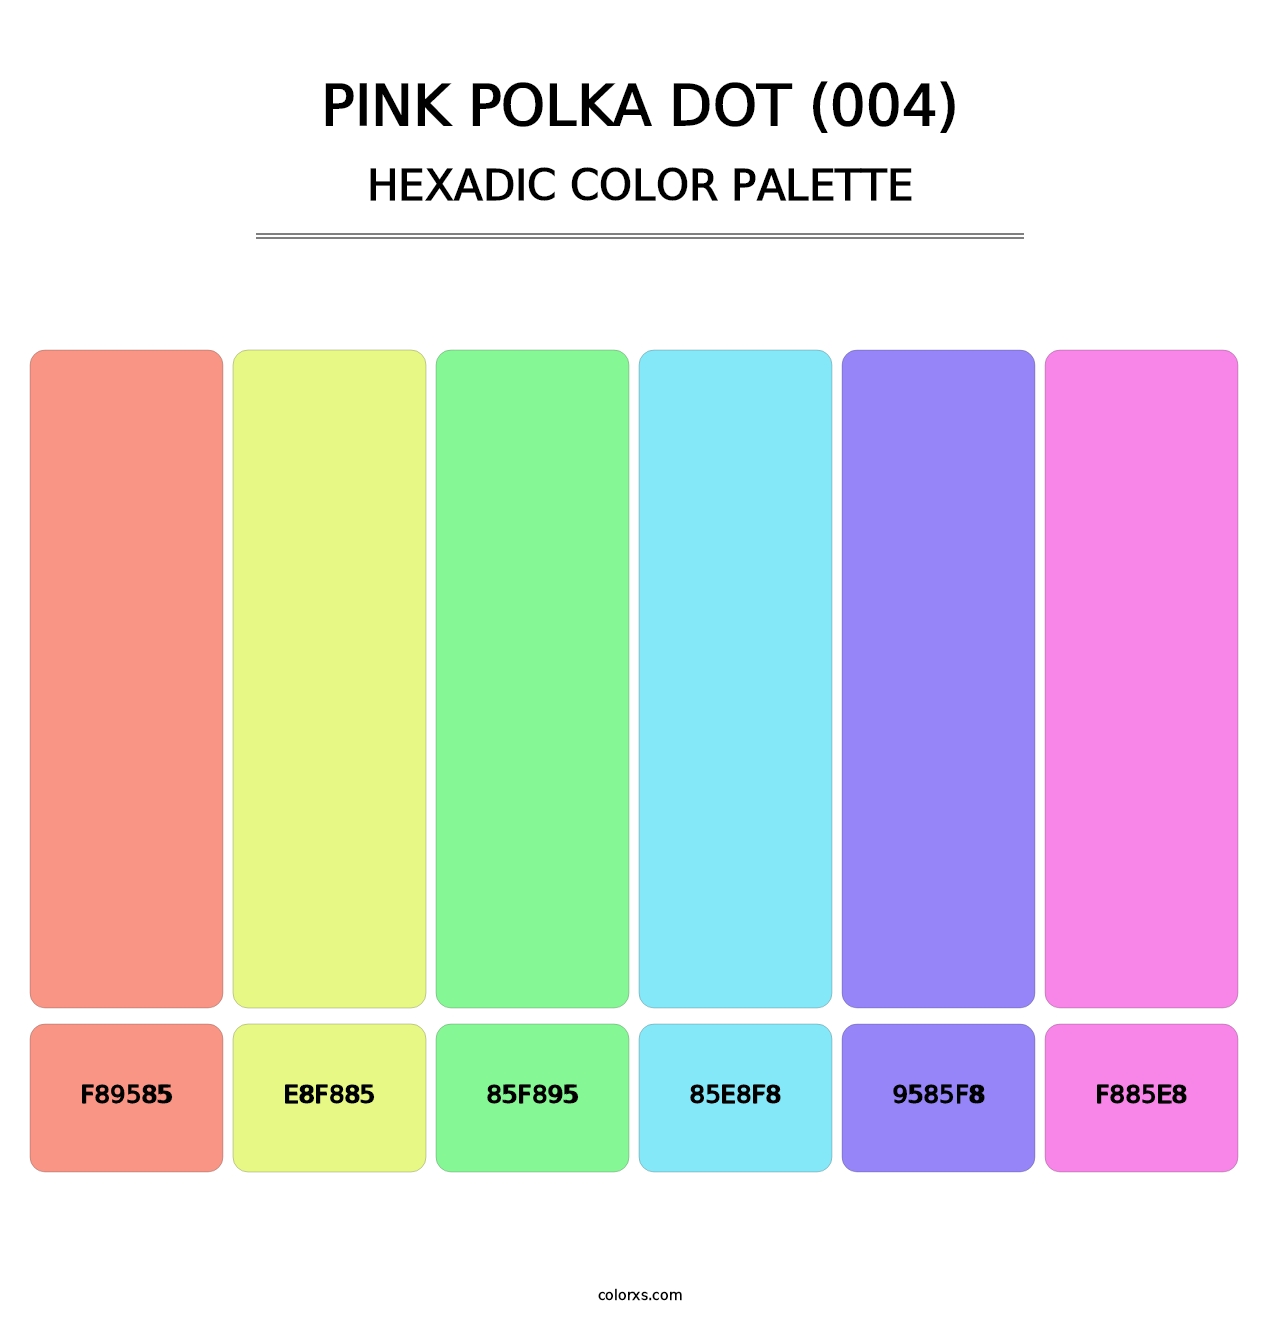 Pink Polka Dot (004) - Hexadic Color Palette